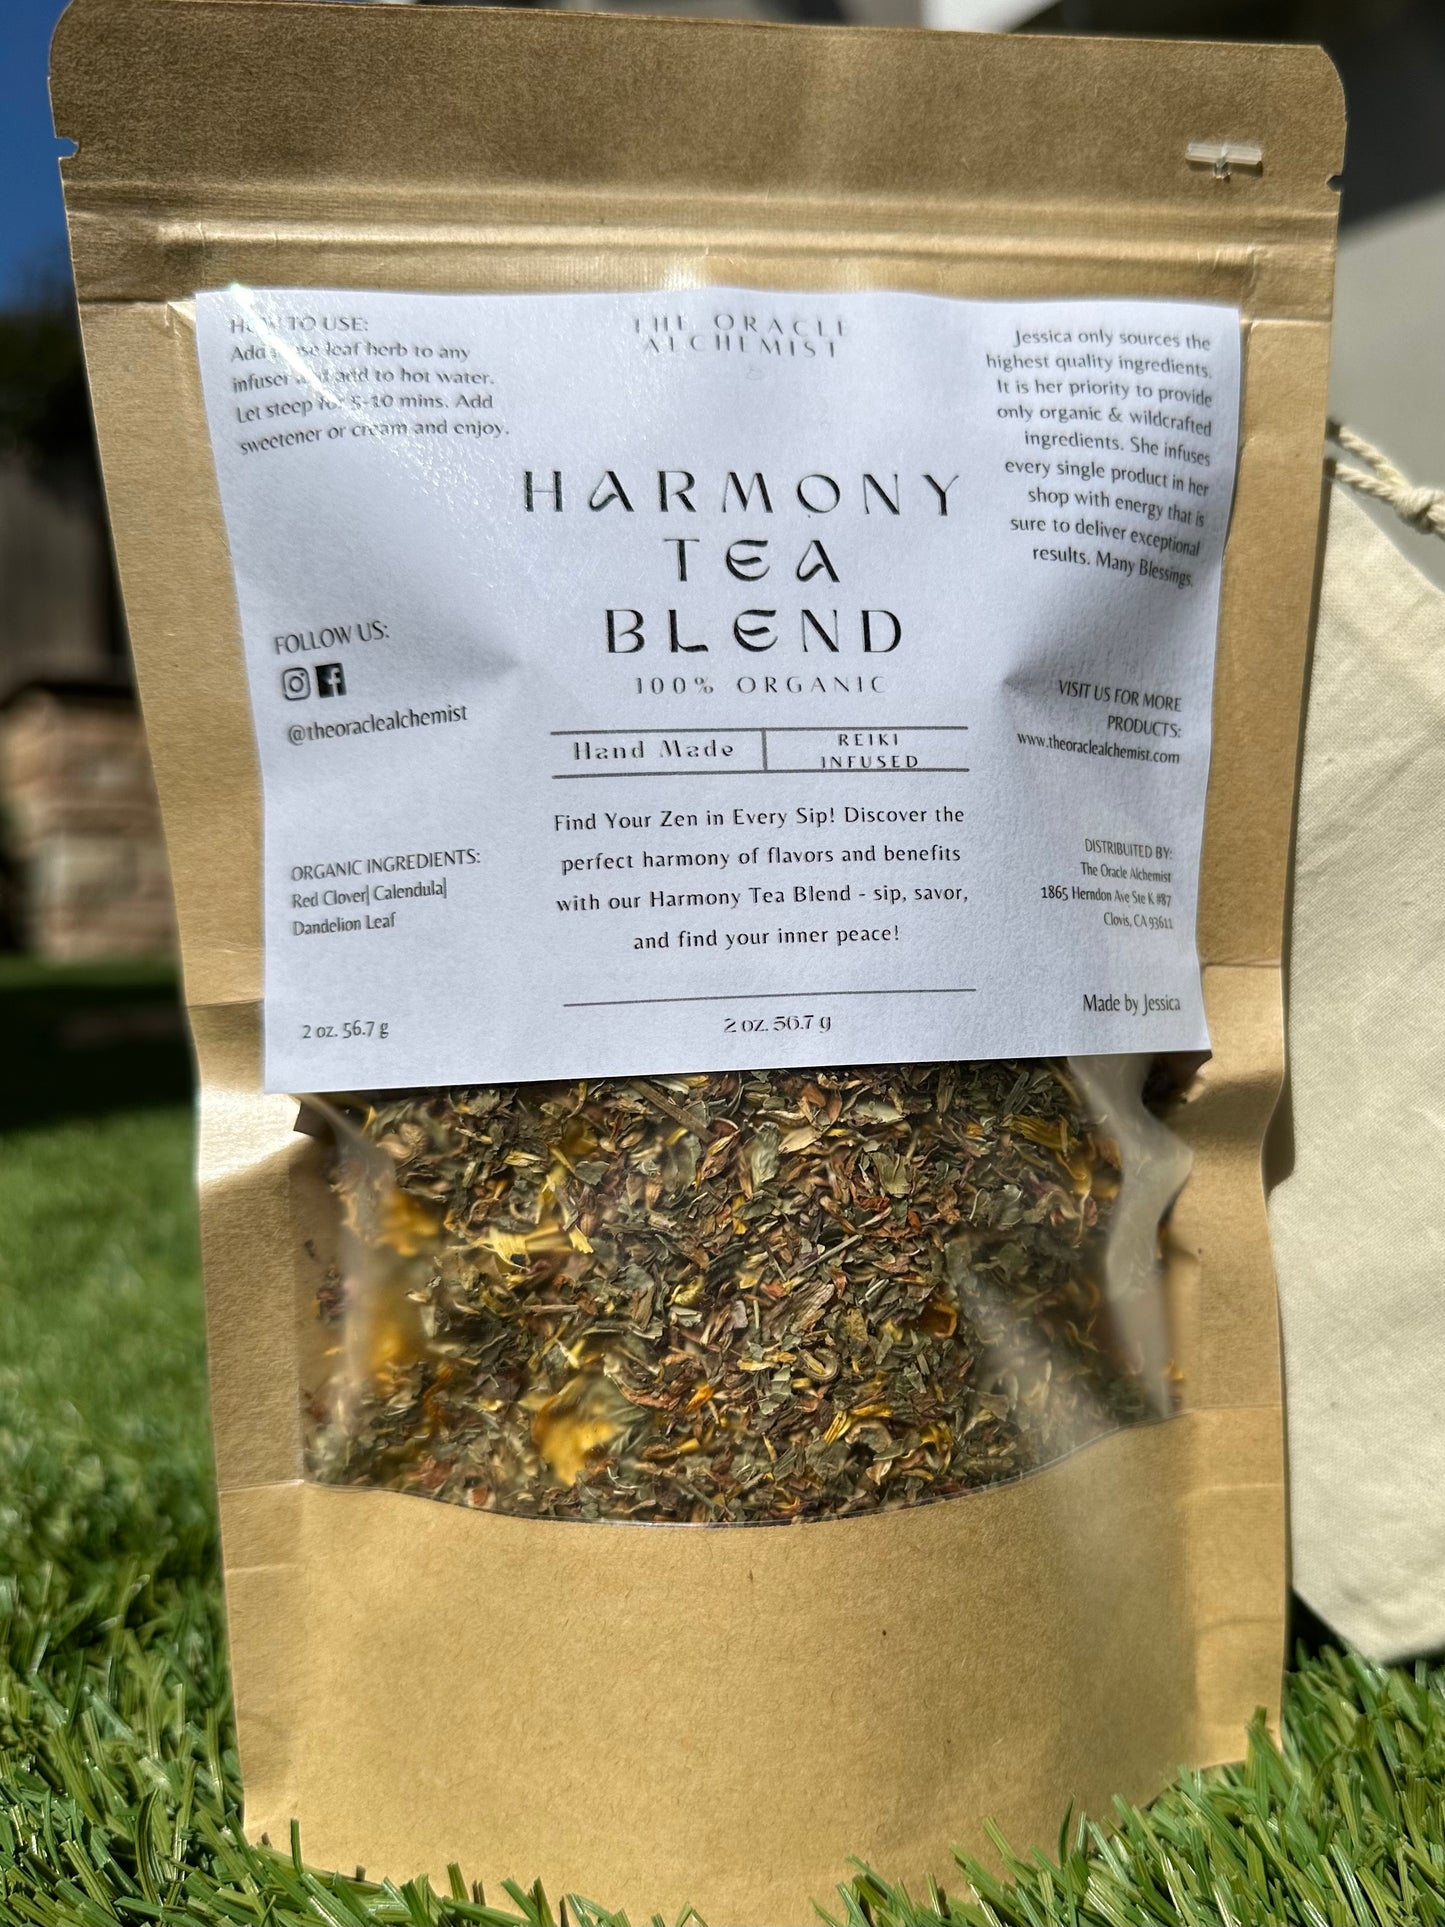 Harmony Tea Blend - The Oracle Alchemist